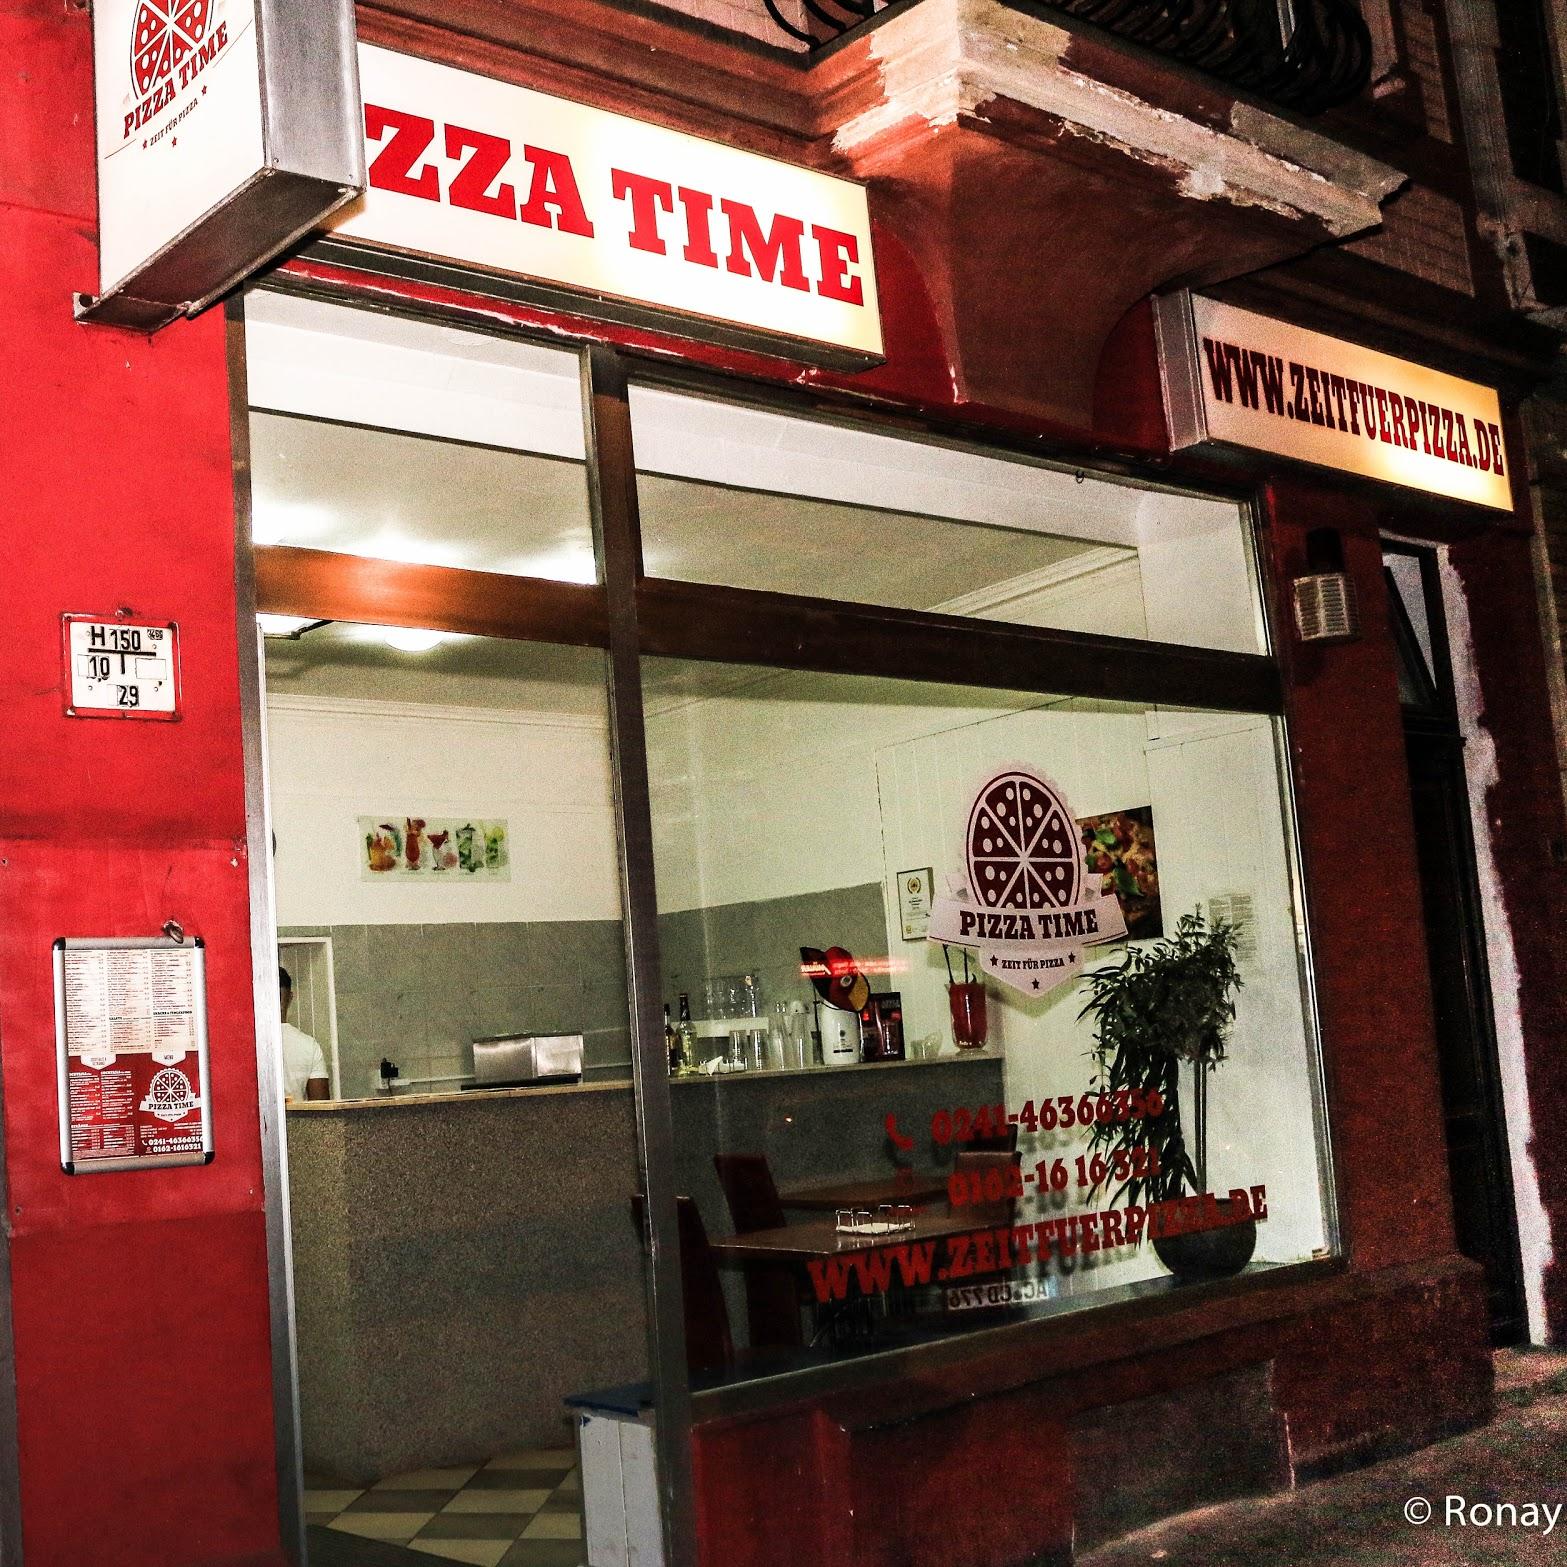 Restaurant "Pizza Time" in Aachen